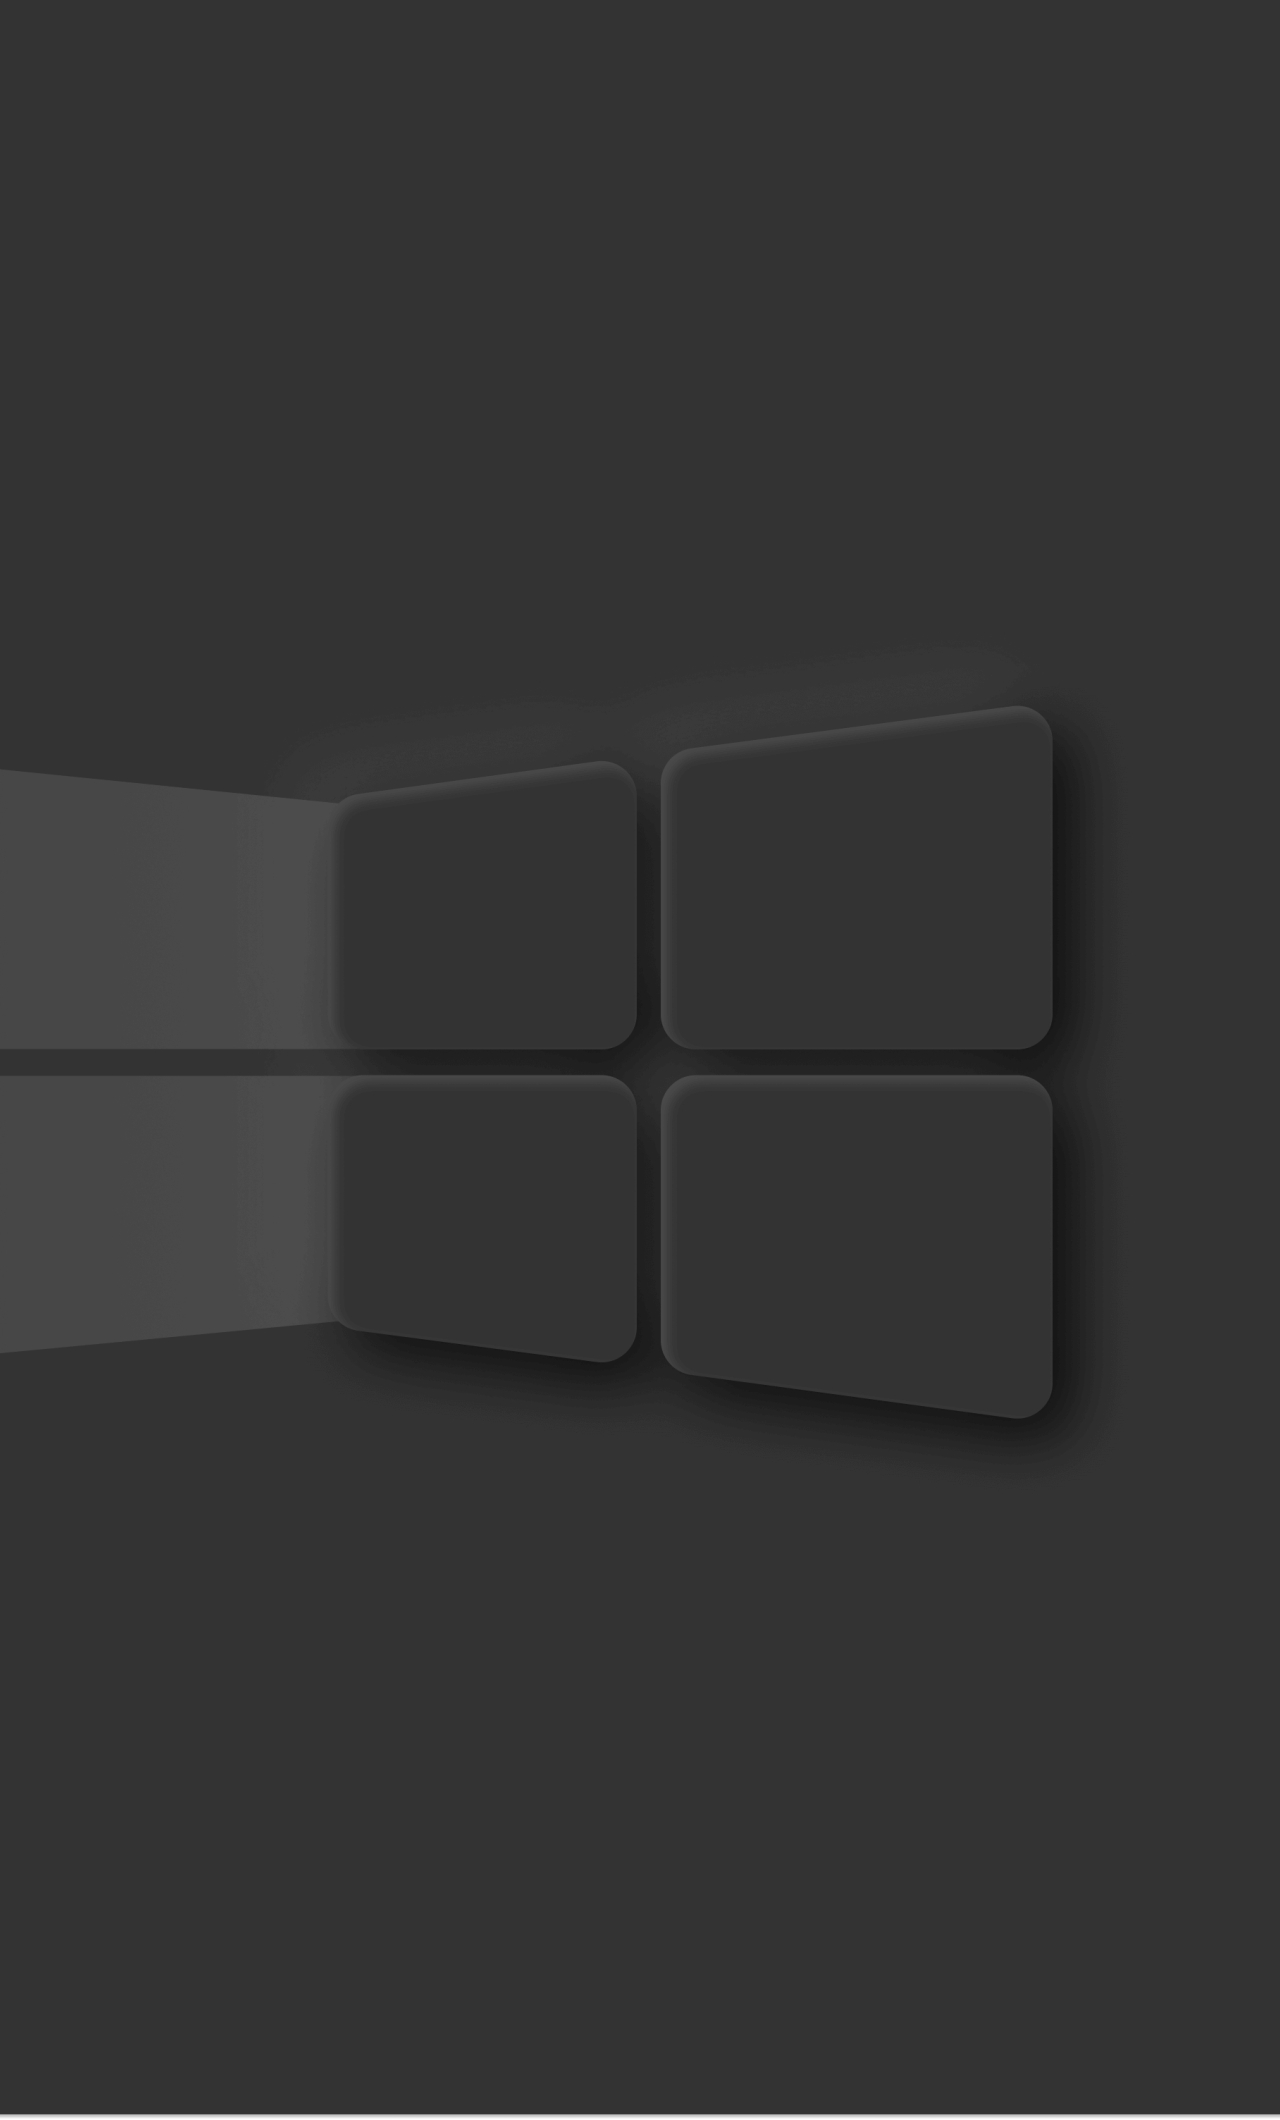 1280x2120 Windows 10 Dark Mode Logo Iphone 6 Plus Wallpaper Hd Hi Tech